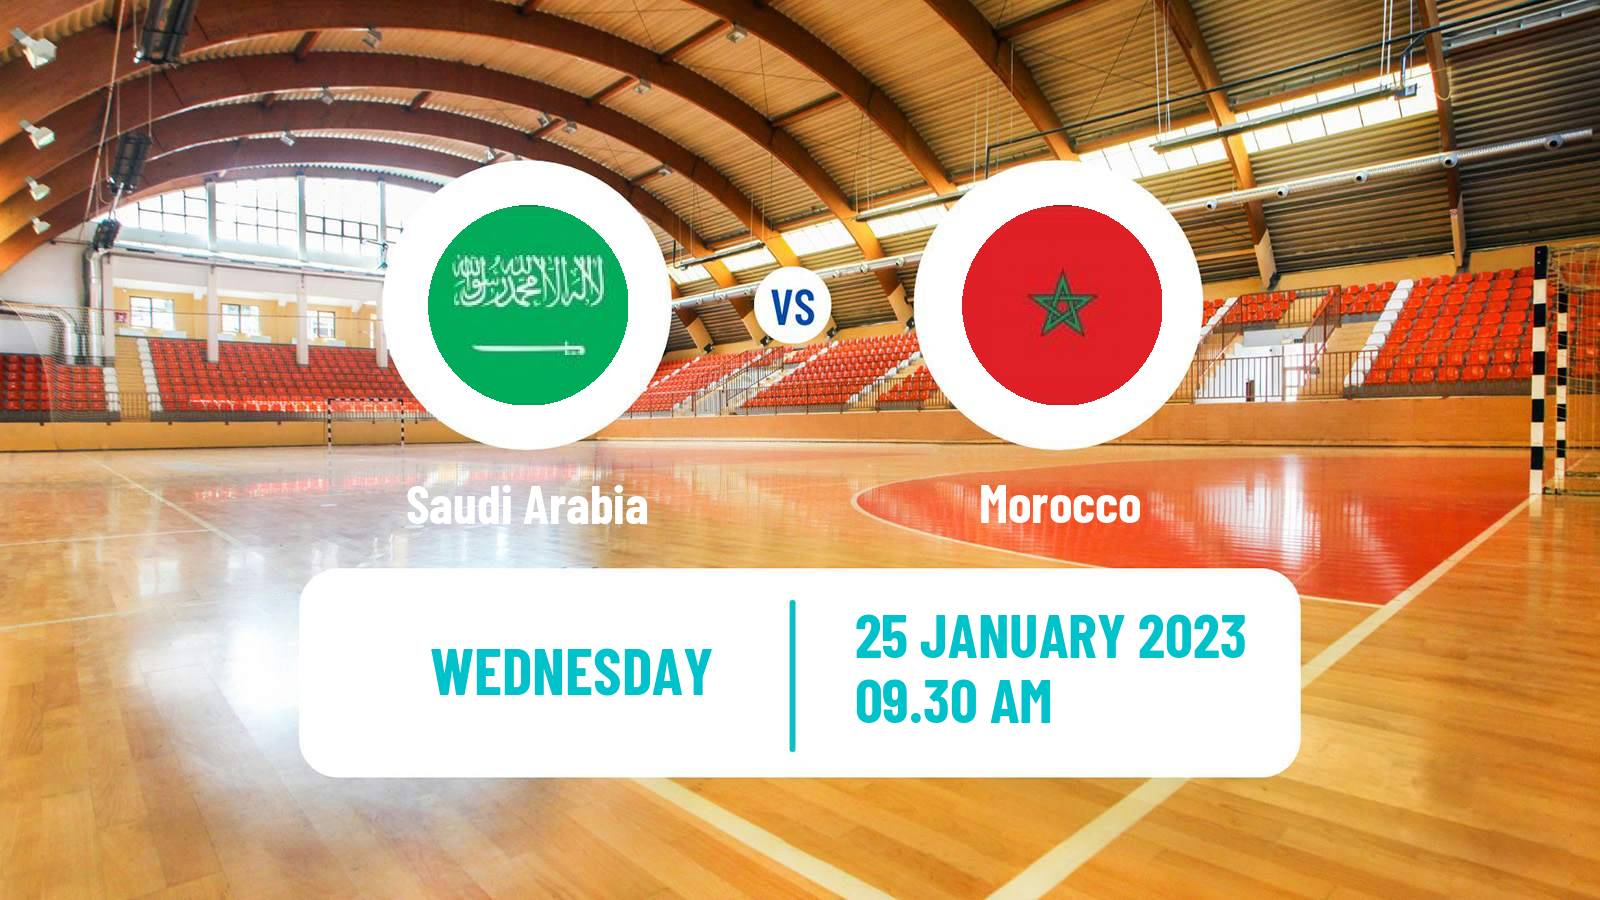 Handball Handball World Championship Saudi Arabia - Morocco